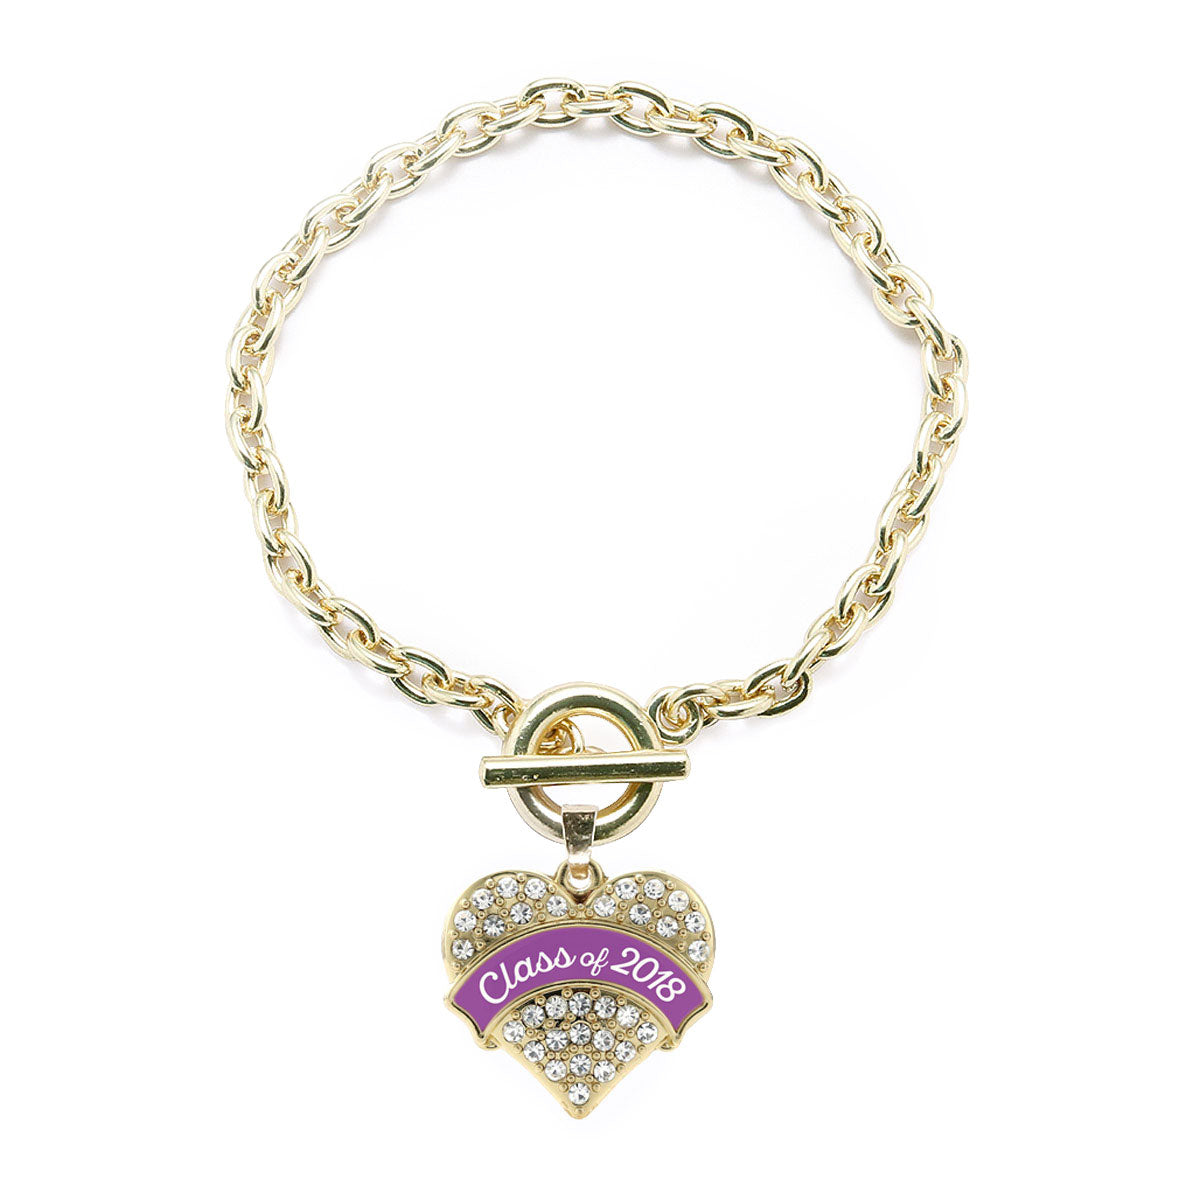 Gold Class of 2018 - Purple Pave Heart Charm Toggle Bracelet